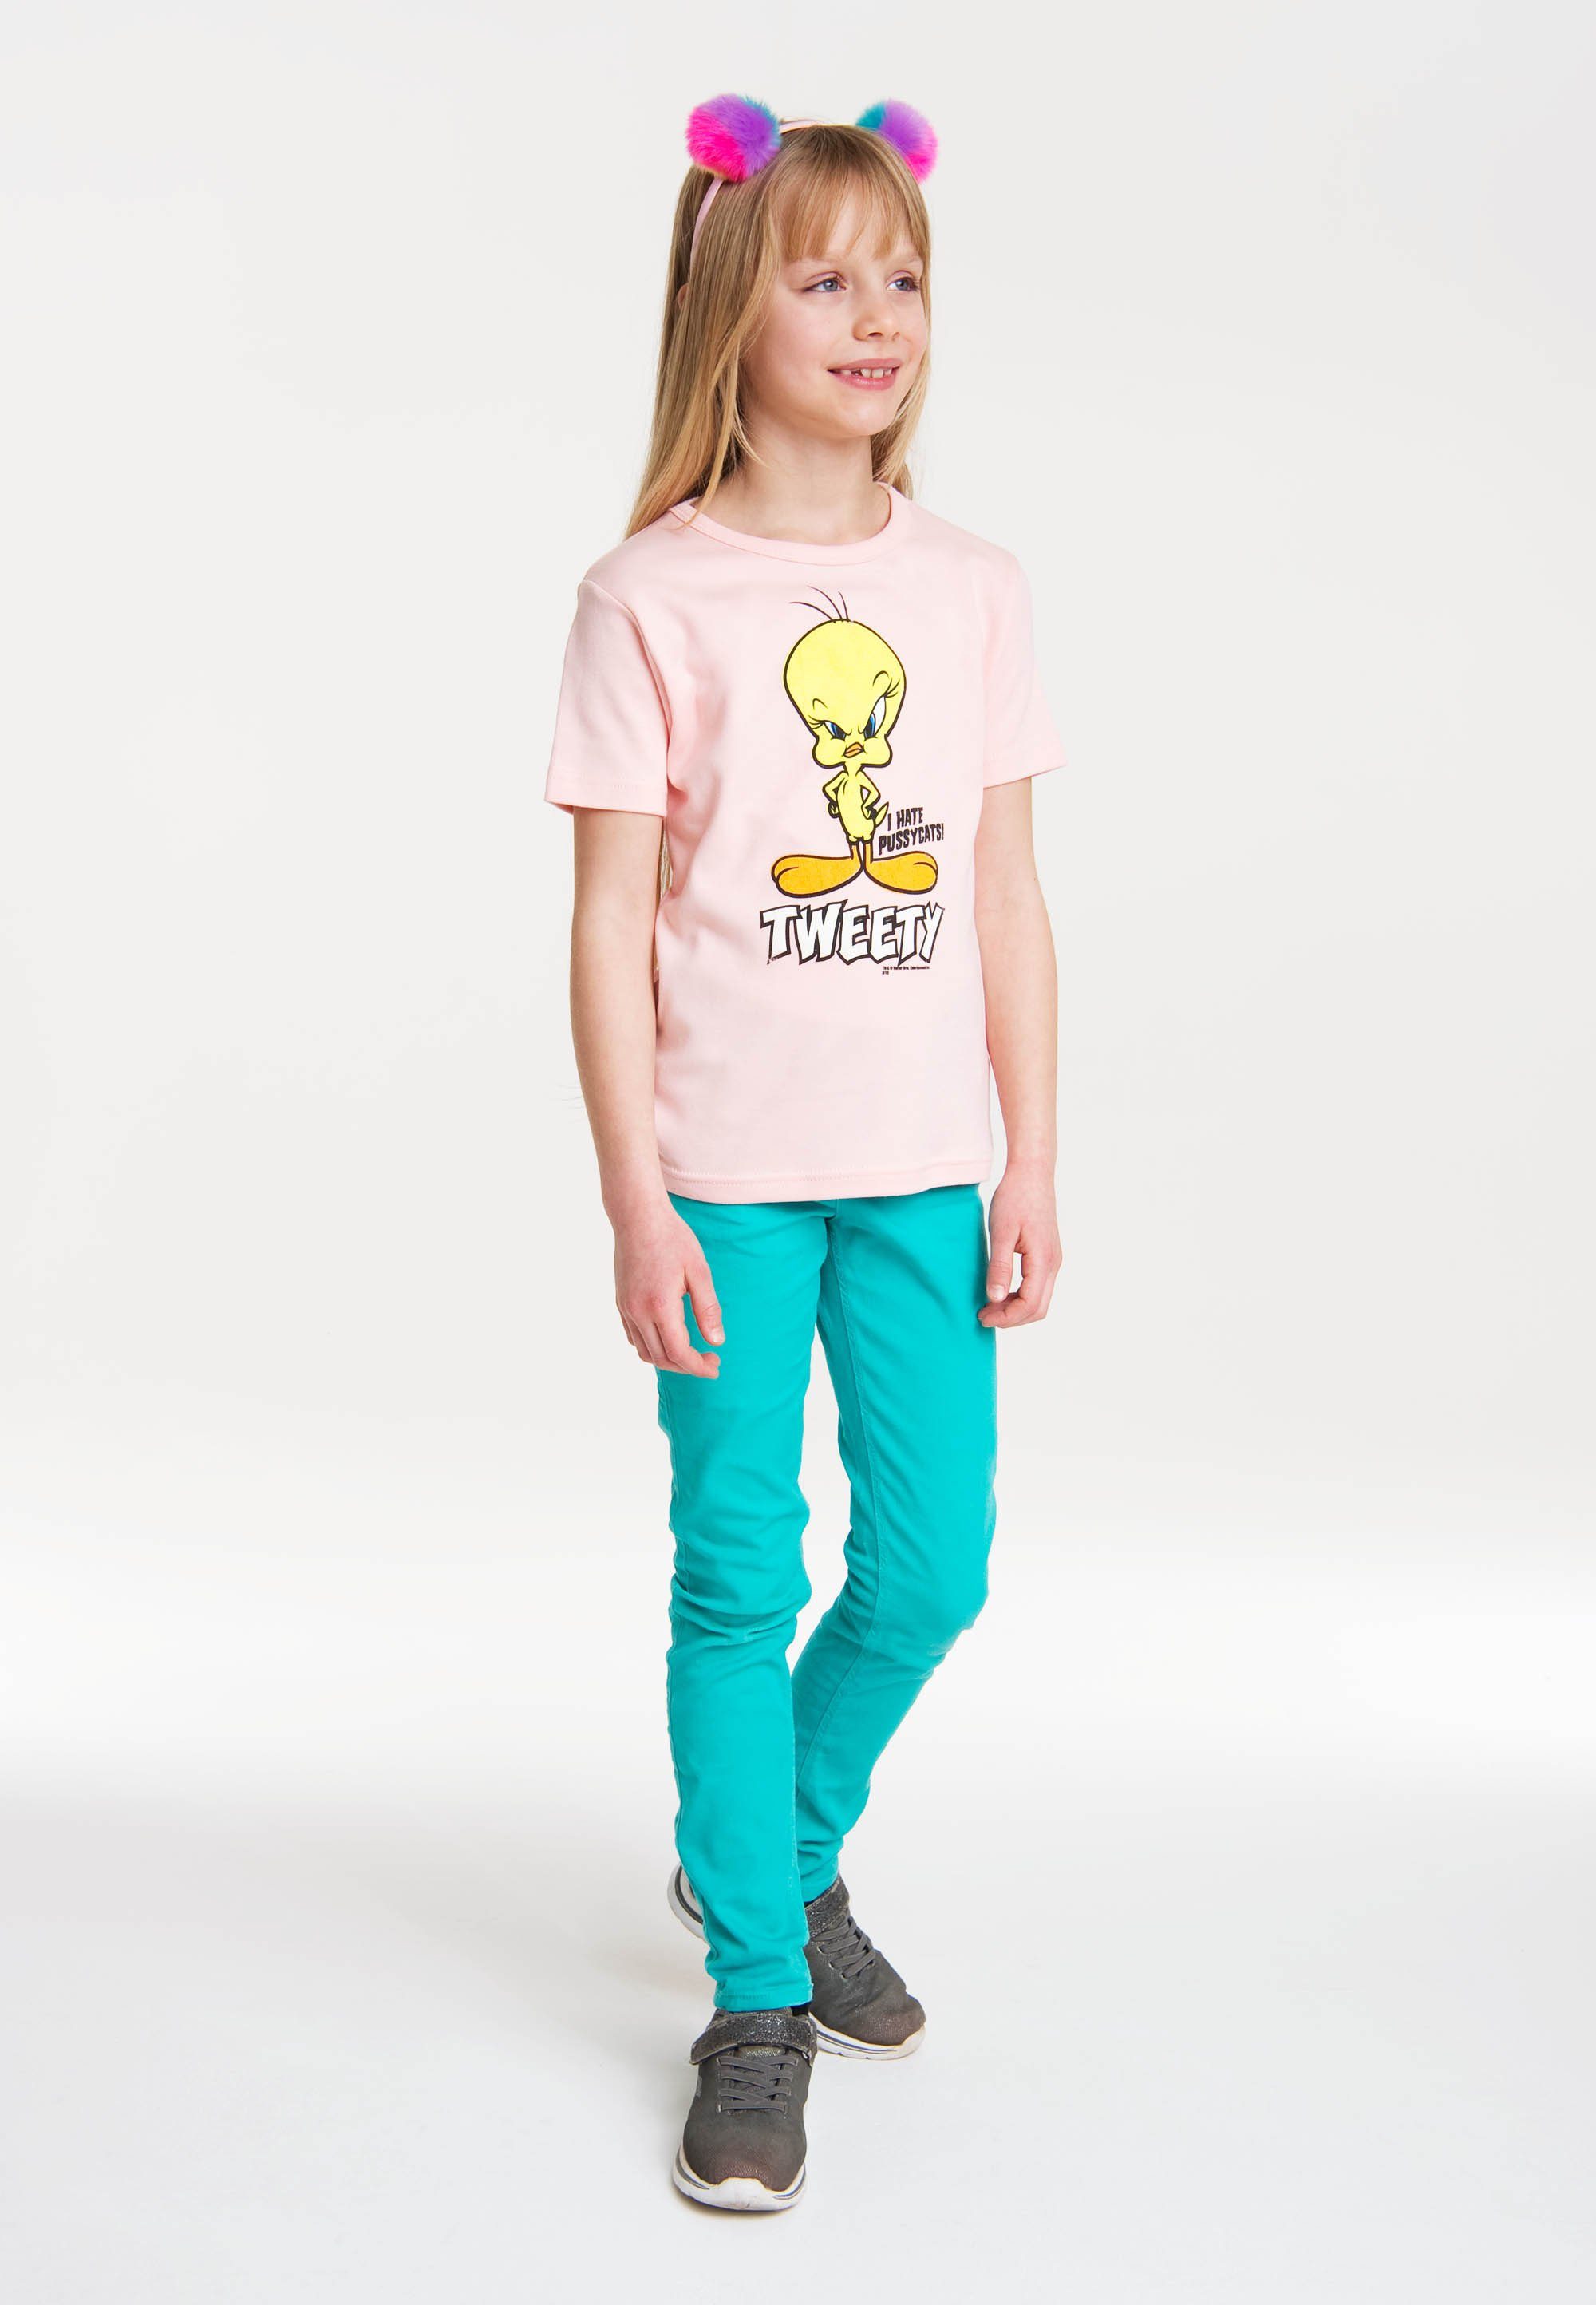 LOGOSHIRT T-Shirt Looney Tunes - Print rosa mit Tweety niedlichem